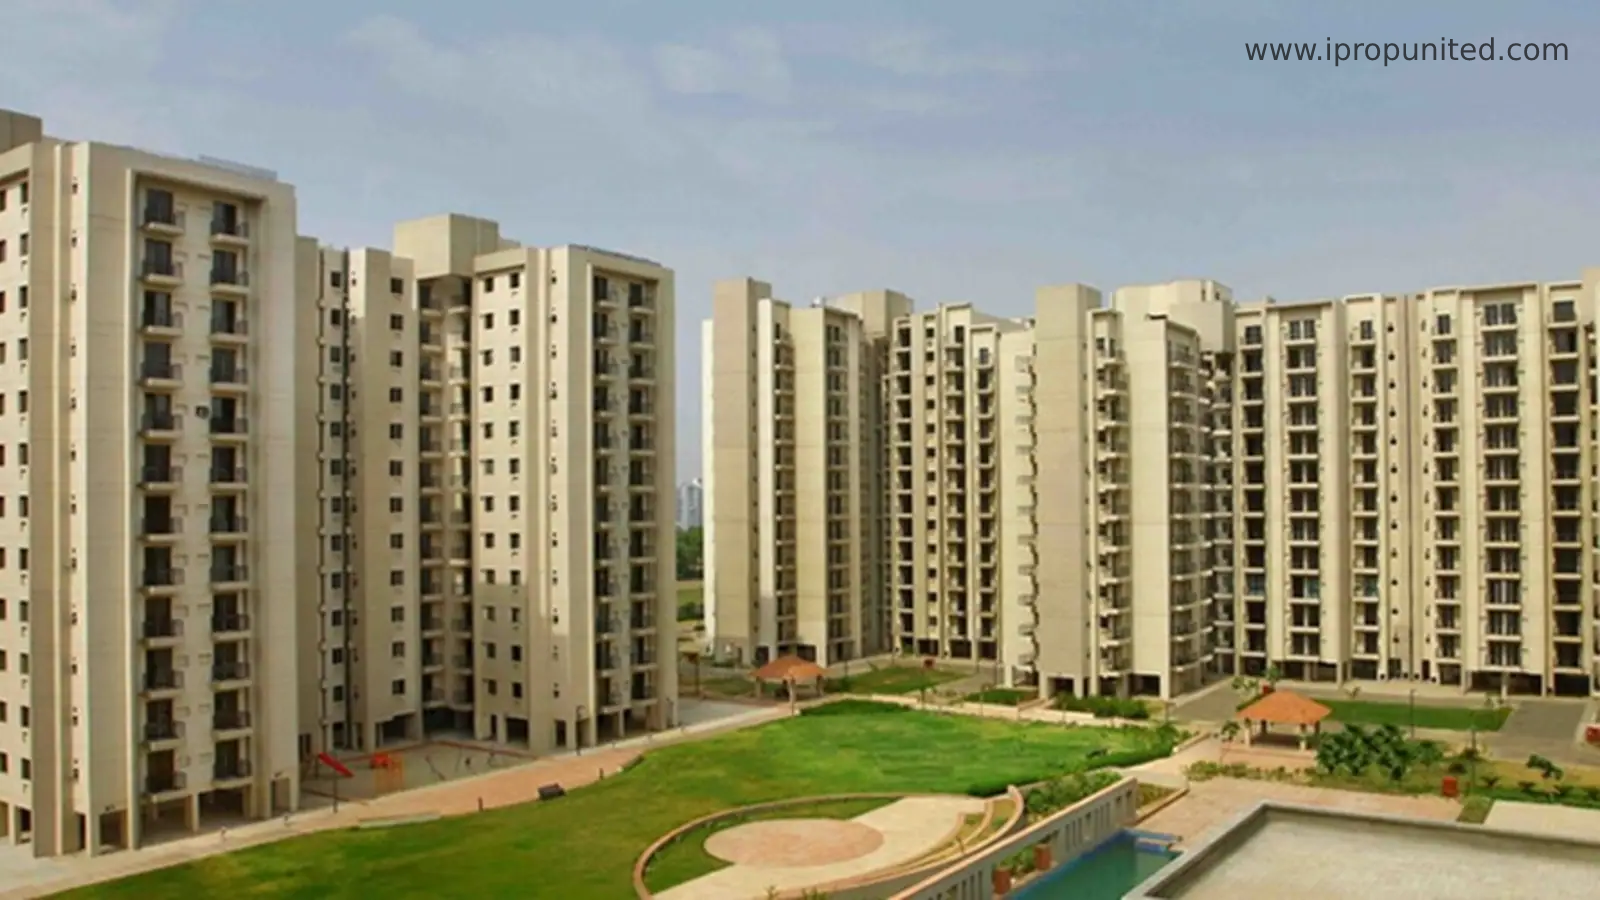 Delhi Last chance to apply for DDA Special Housing Scheme flats